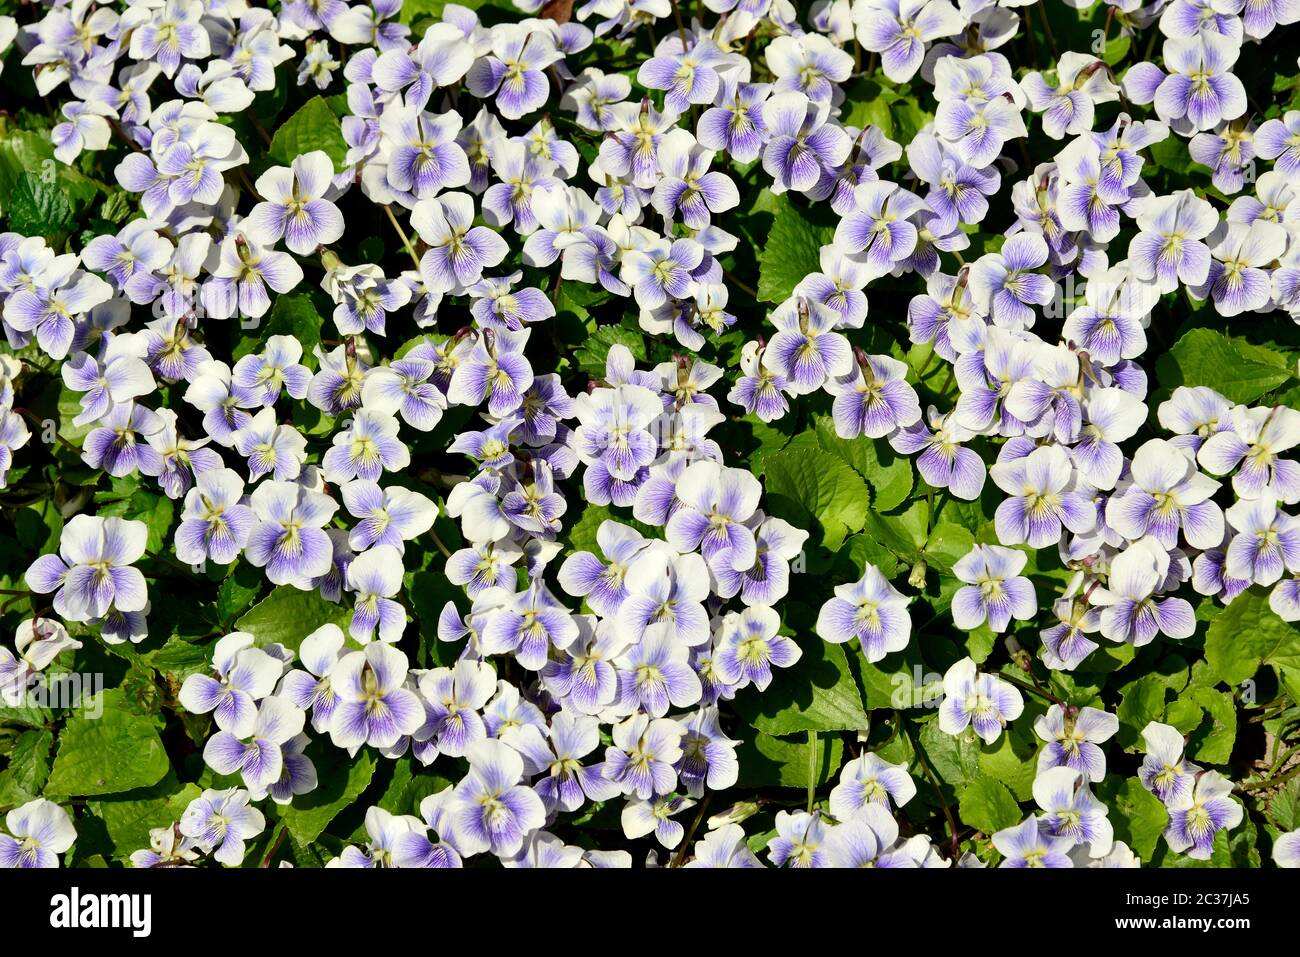 common blue violet, common meadow violet, purple violet, woolly blue violet, hooded violet, Viola sororia, amerikai ibolya Stock Photo